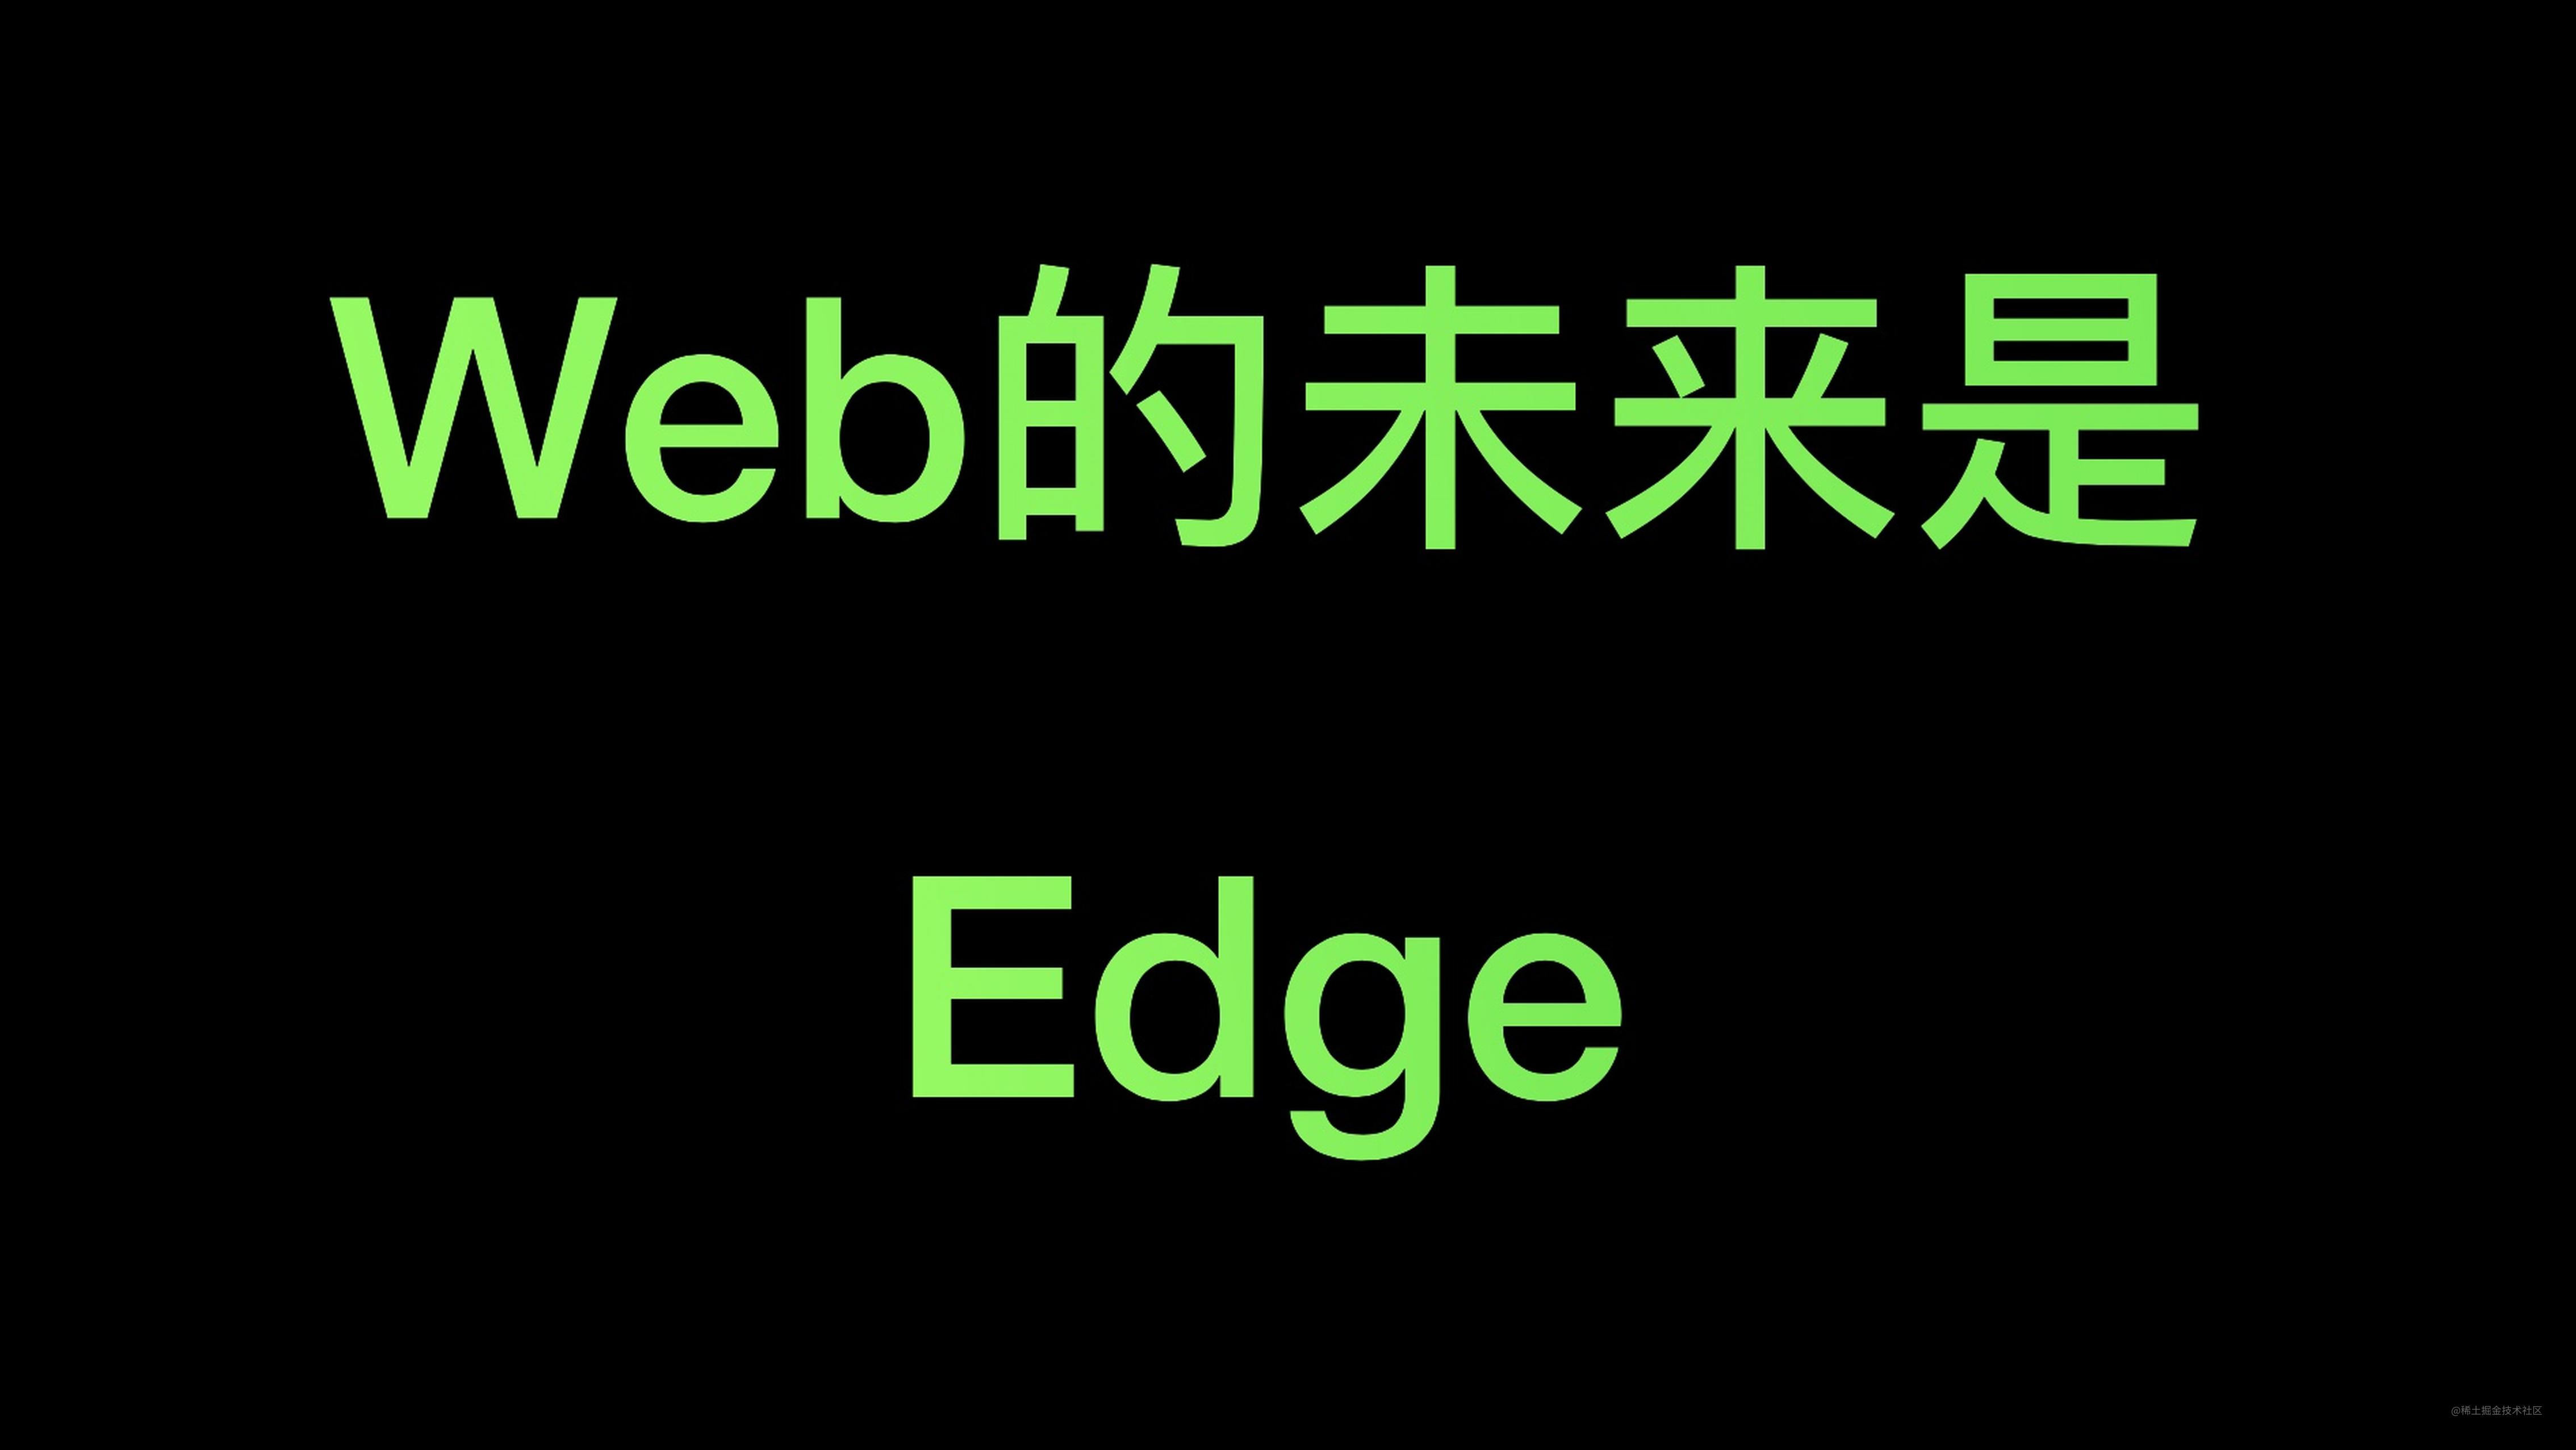 Web的未来是Edge， 抛弃SSR+ Serverless， 使用SSR + Edge